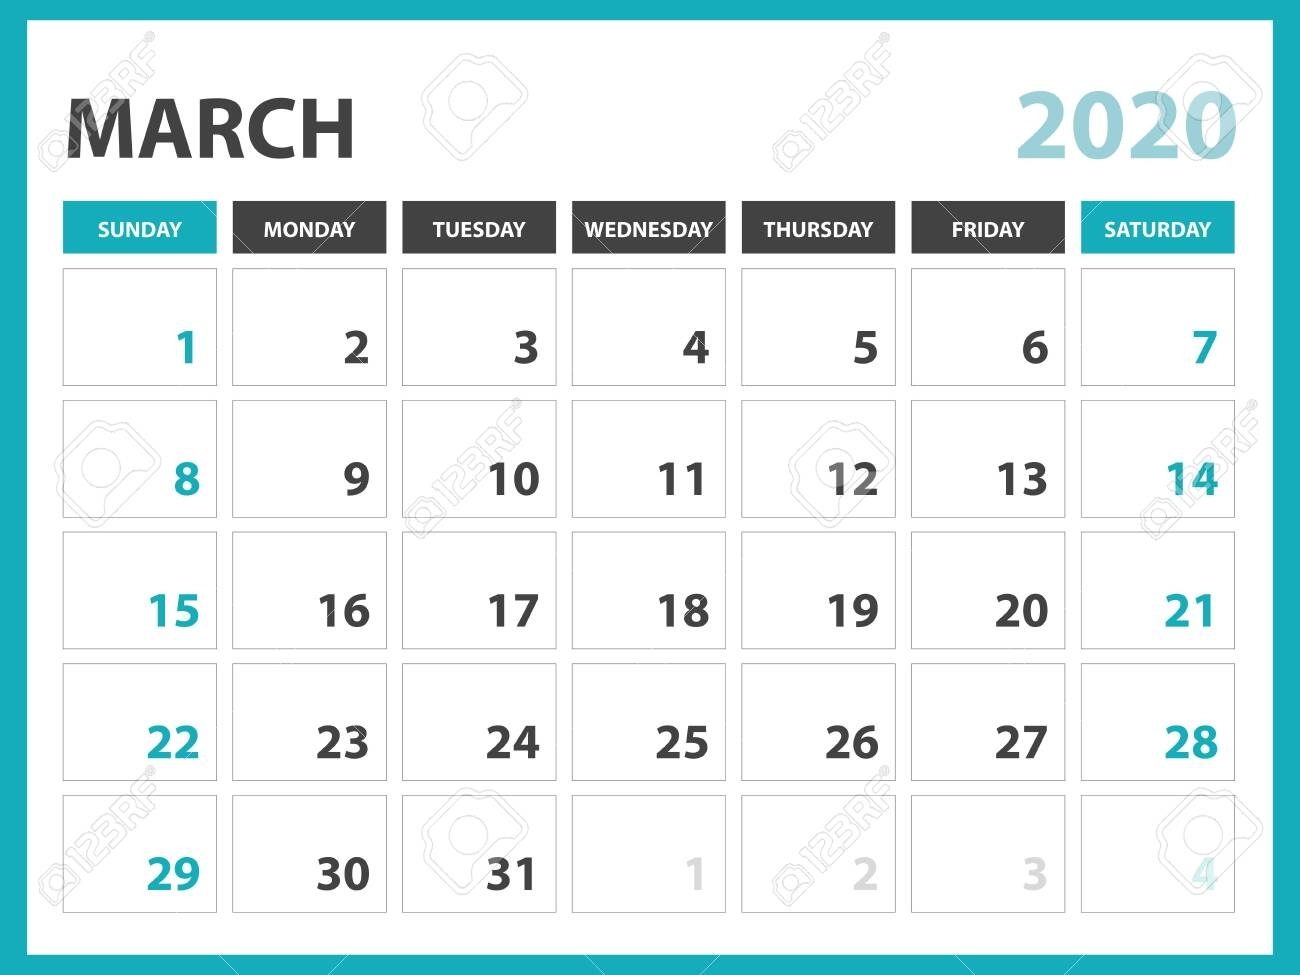 Desk Calendar Layout Size 8 X 6 Inch, March 2020 Calendar Template,..